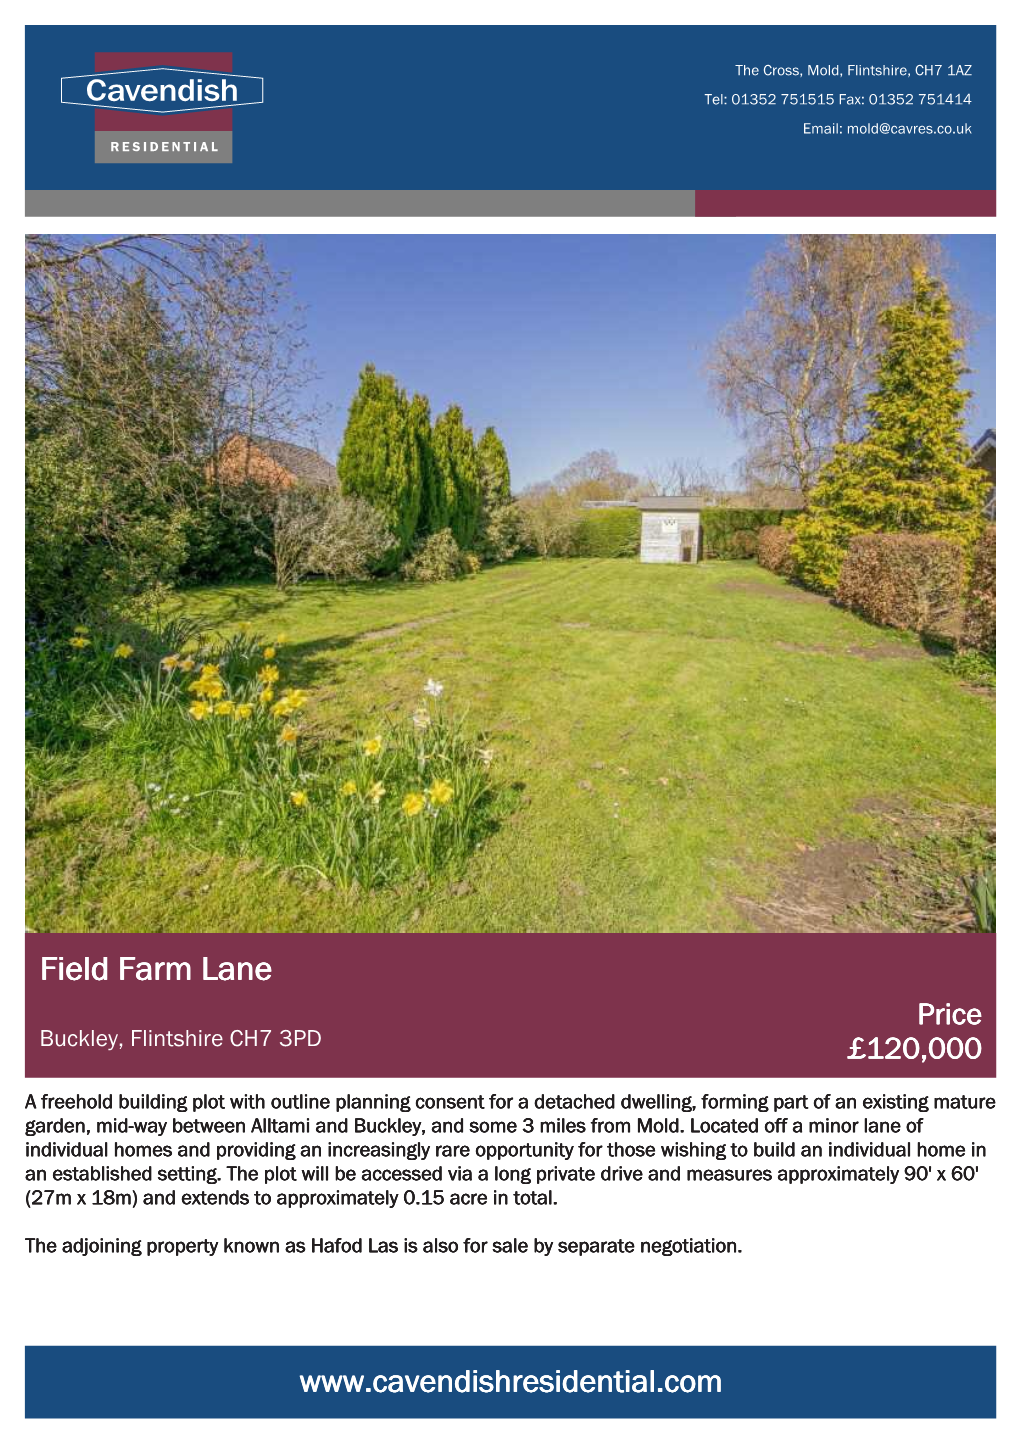 Field Farm Lane Price Buckley, Flintshire CH7 3PD £120,000